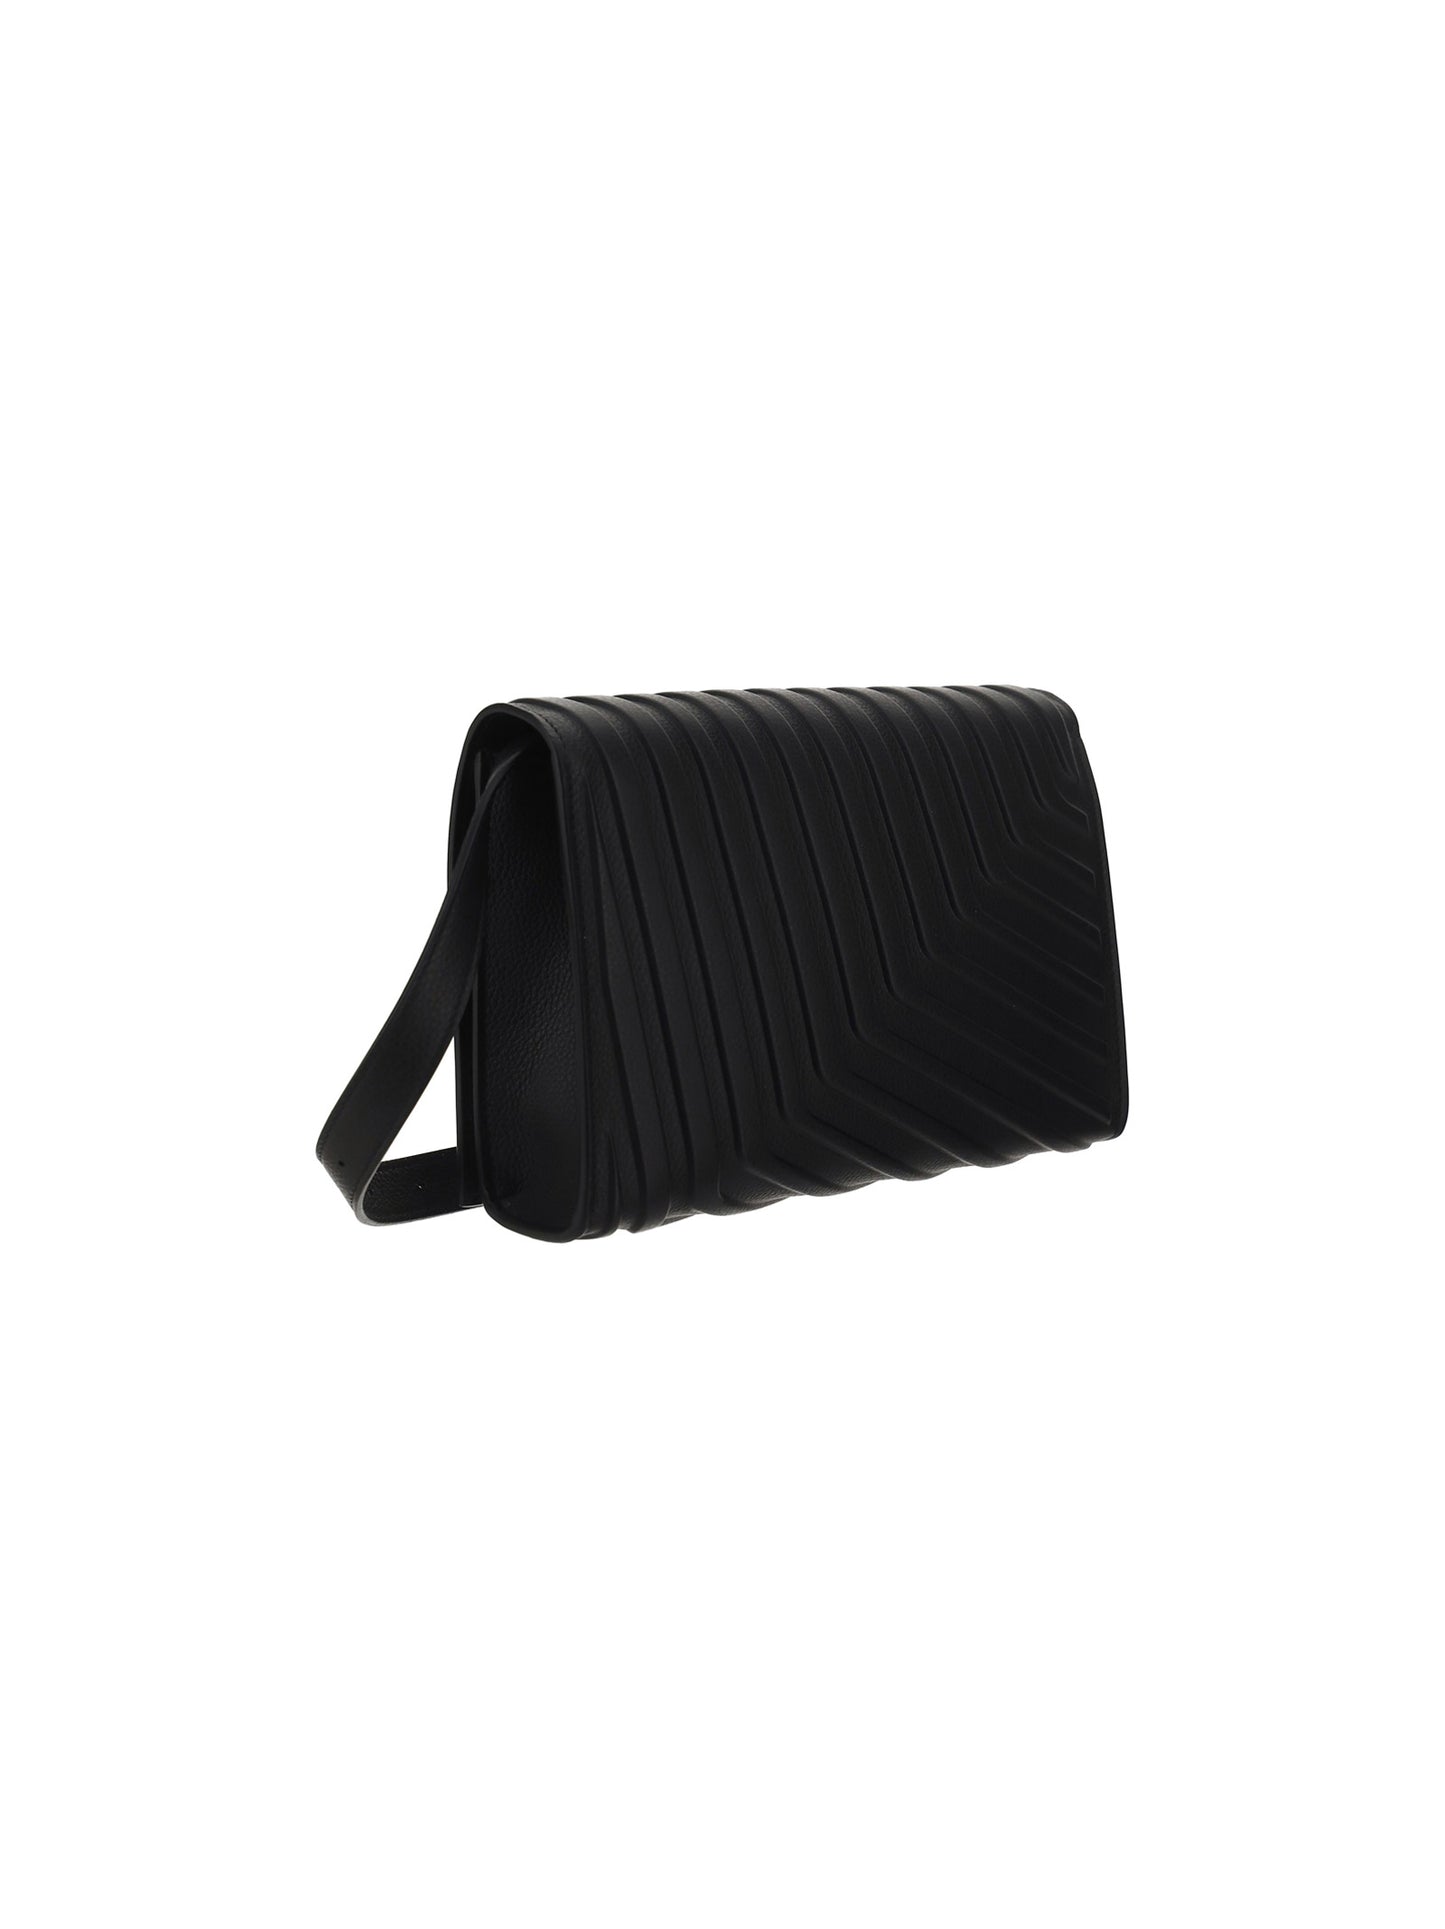 Car Flap Bag With Strap - Black